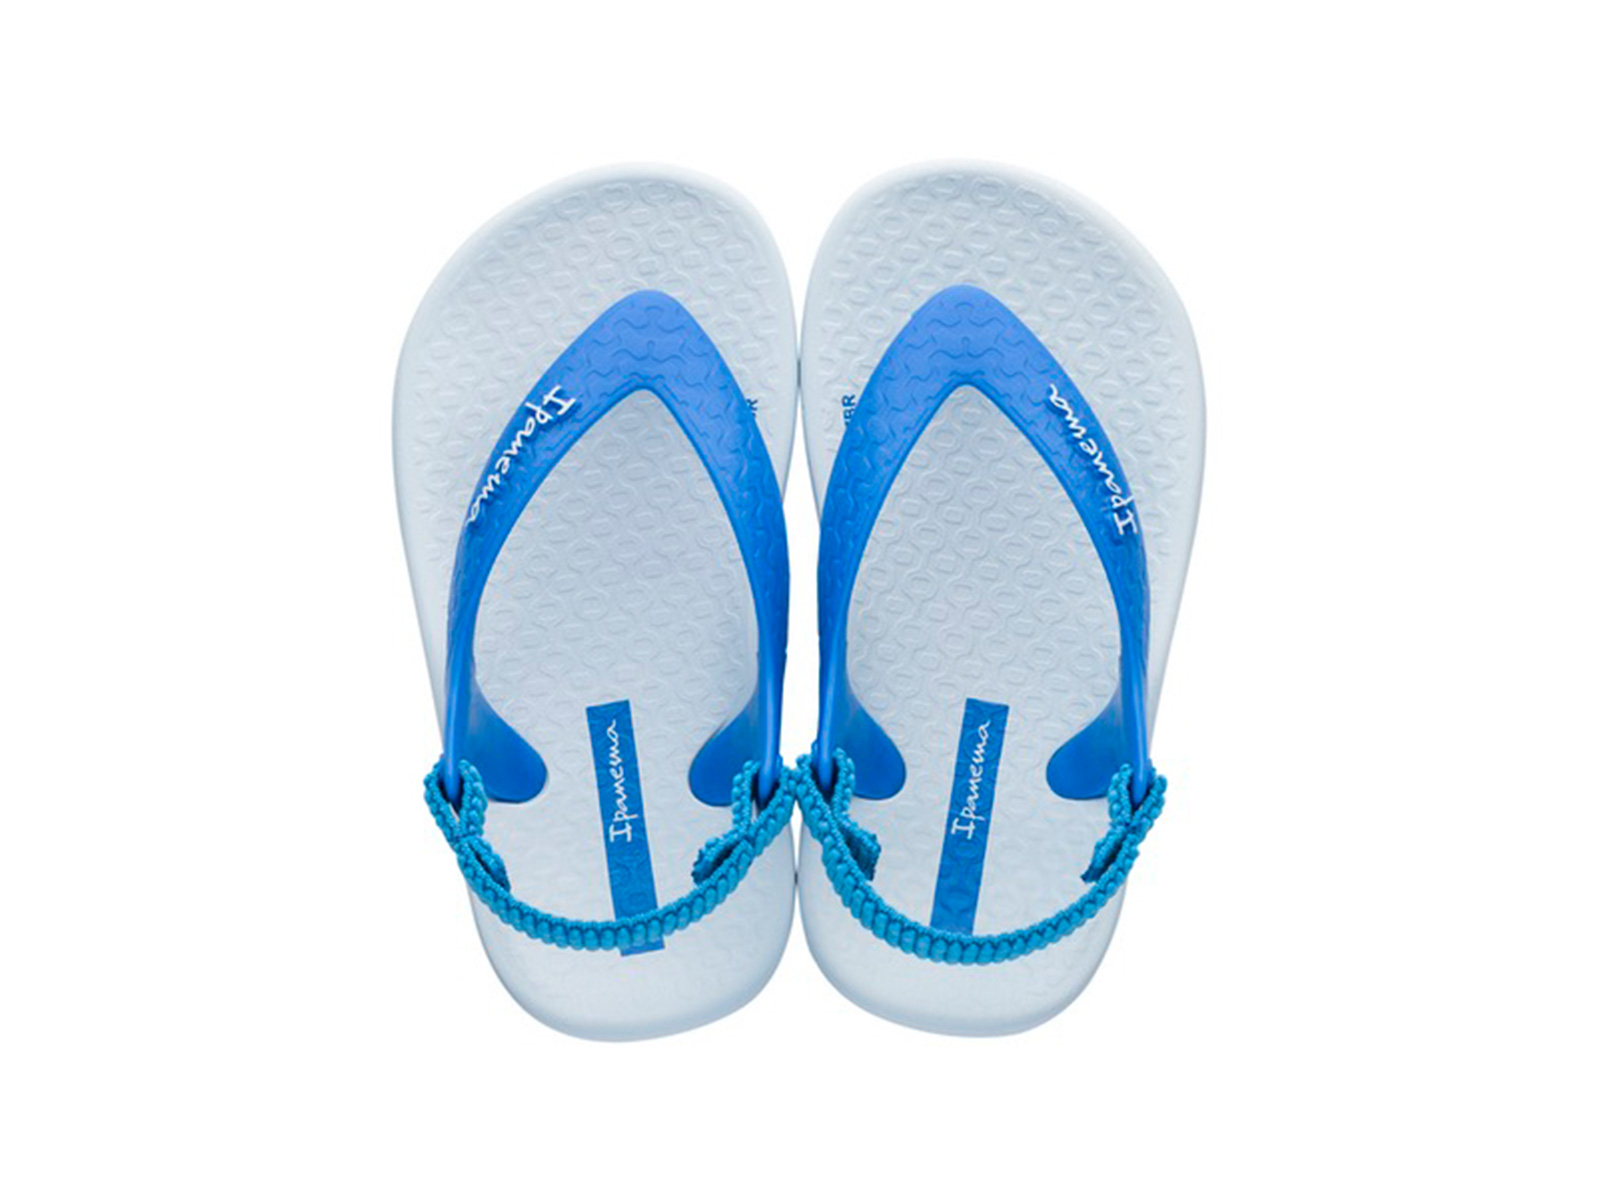 Ipanema Baby Anatomica Soft Sandals Infant Flip Flops w Heel Strap Blue 